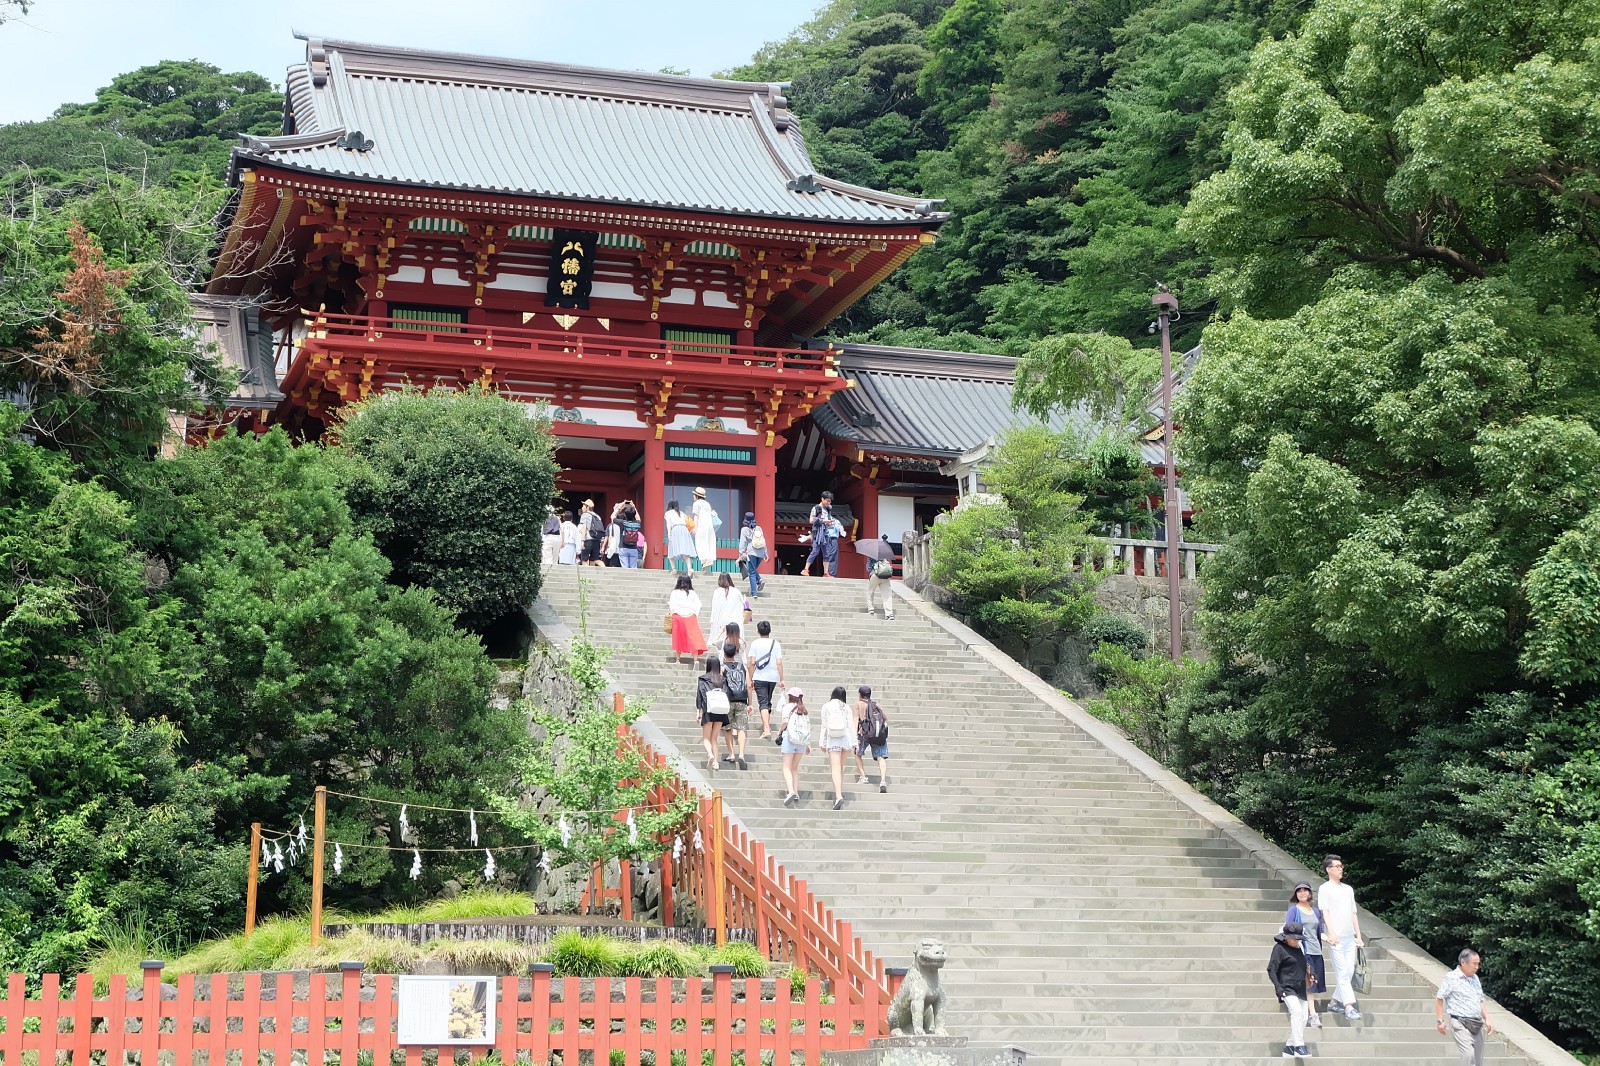 Tsurugaoka Hachimangu Shrine: Popular Spiritual Shrine in Kamakura.